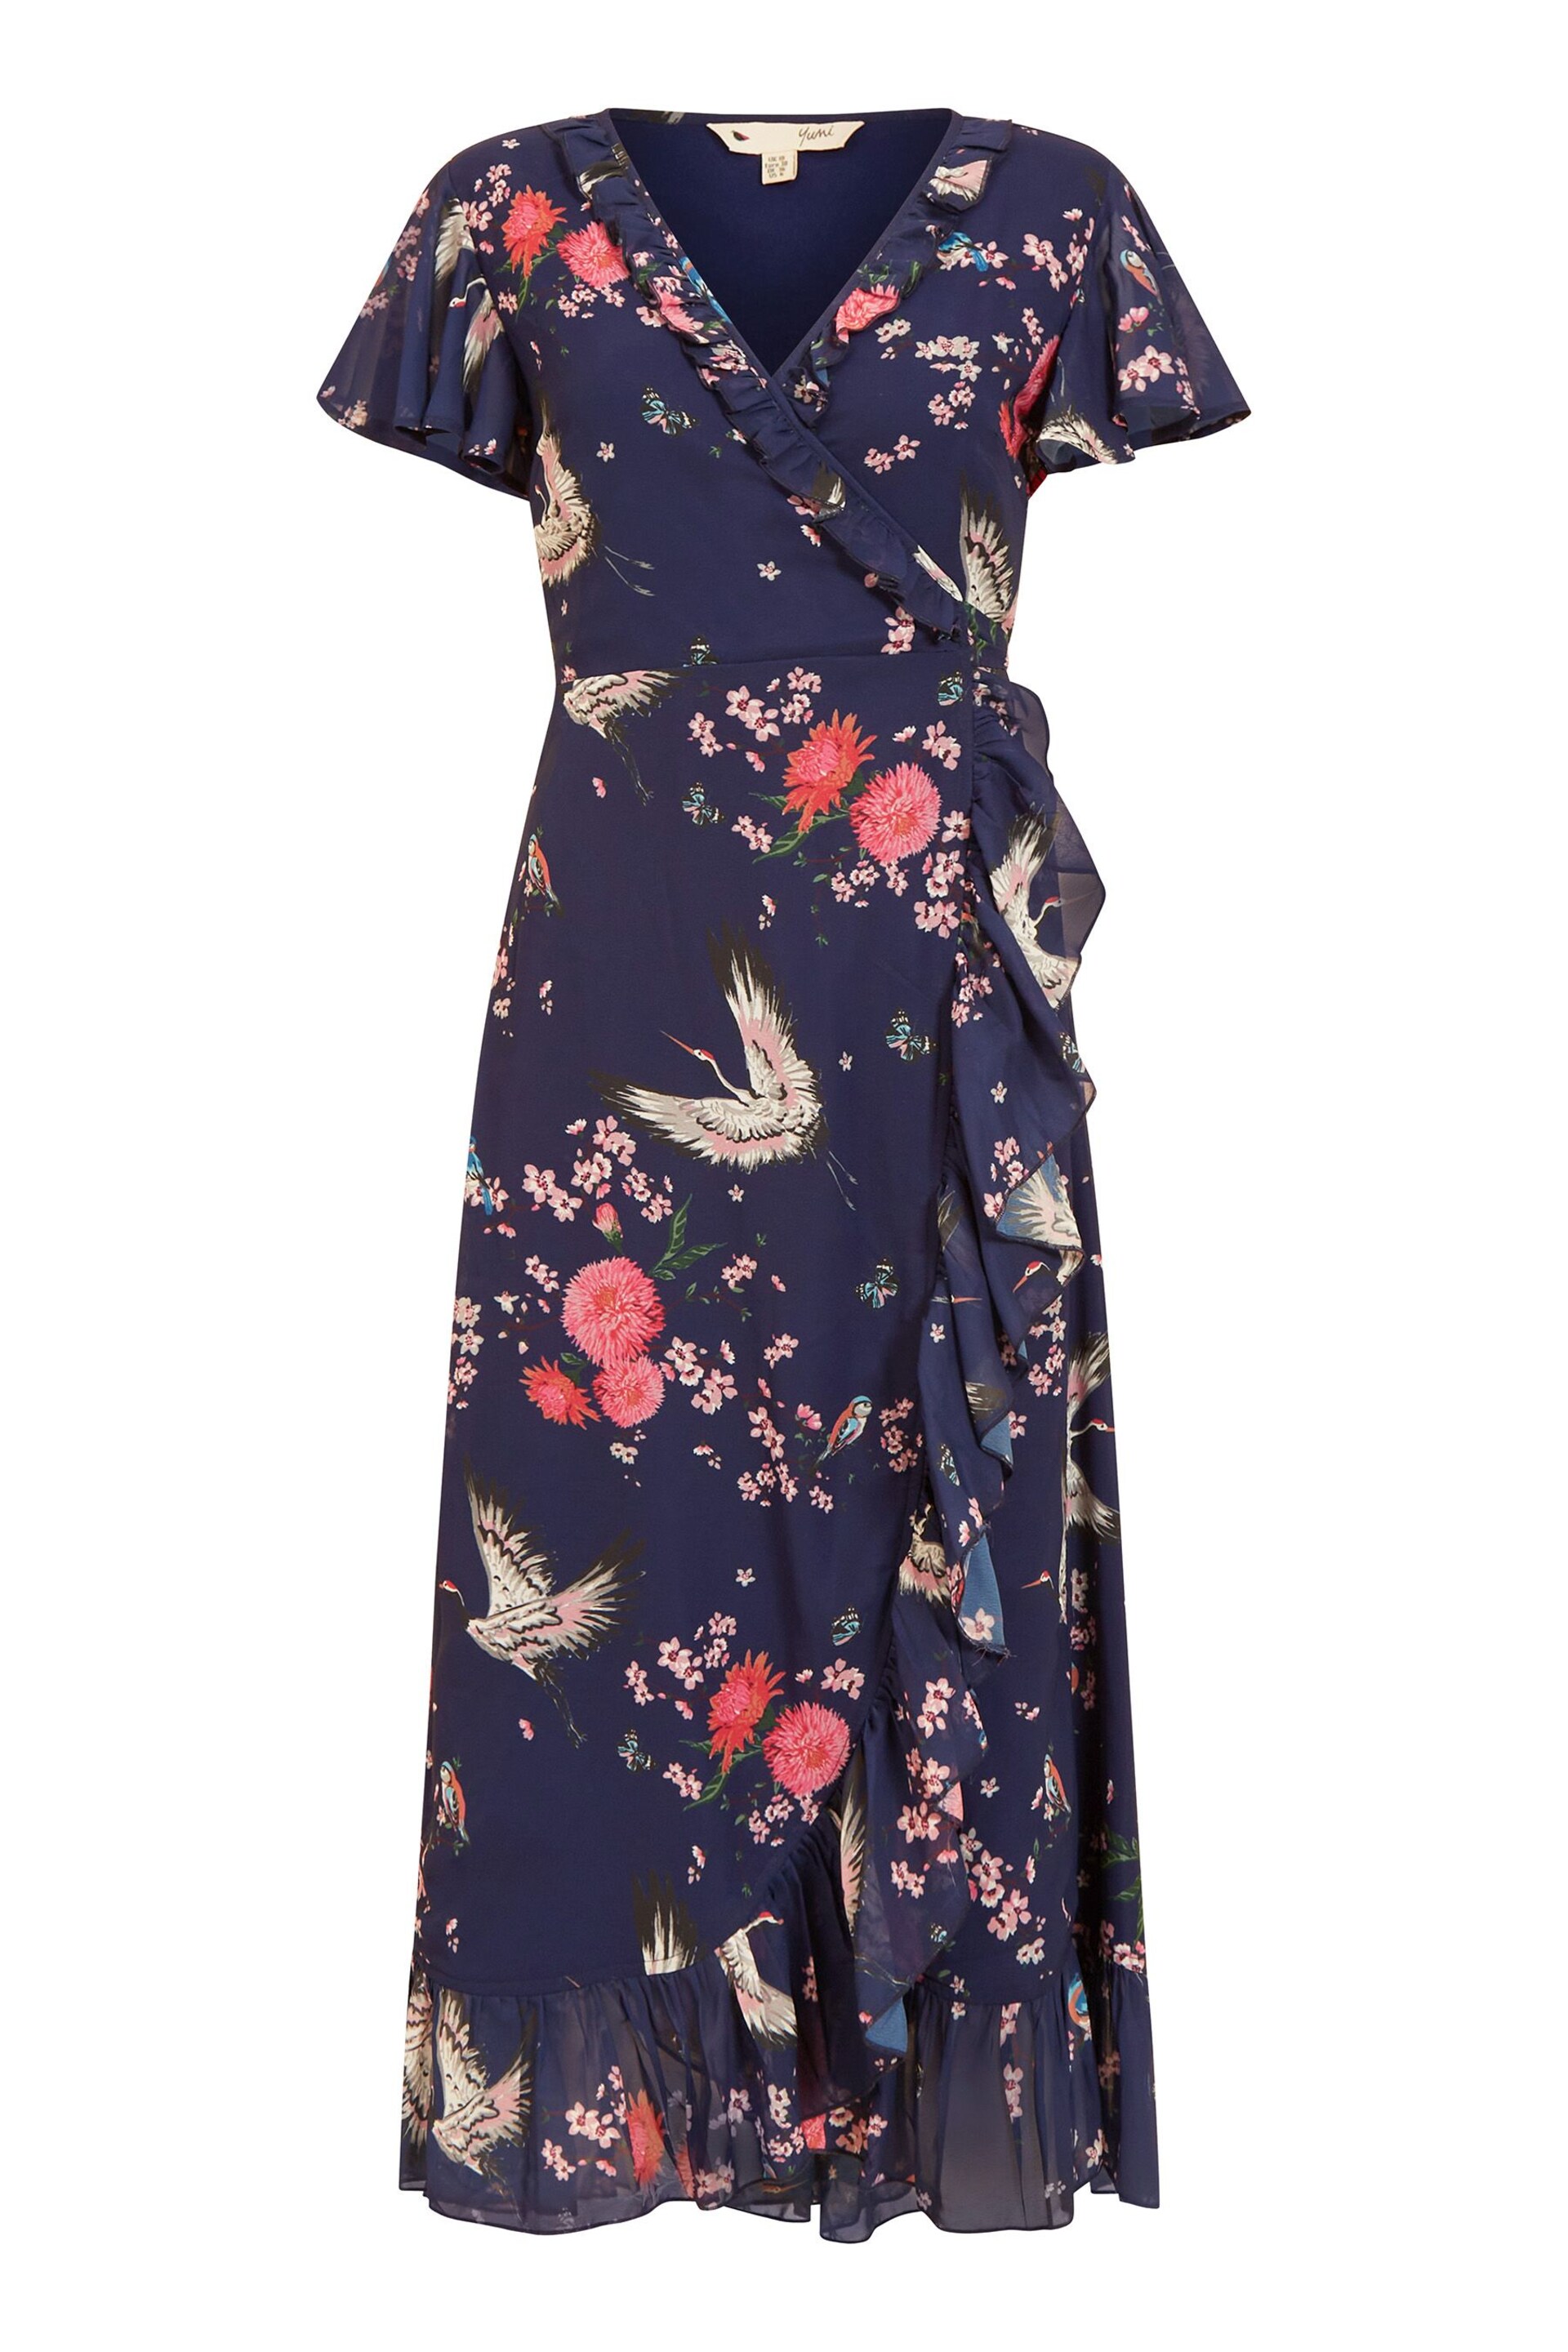 Yumi Dark Blue Satin Crane Print Wrap Dress - Image 4 of 4